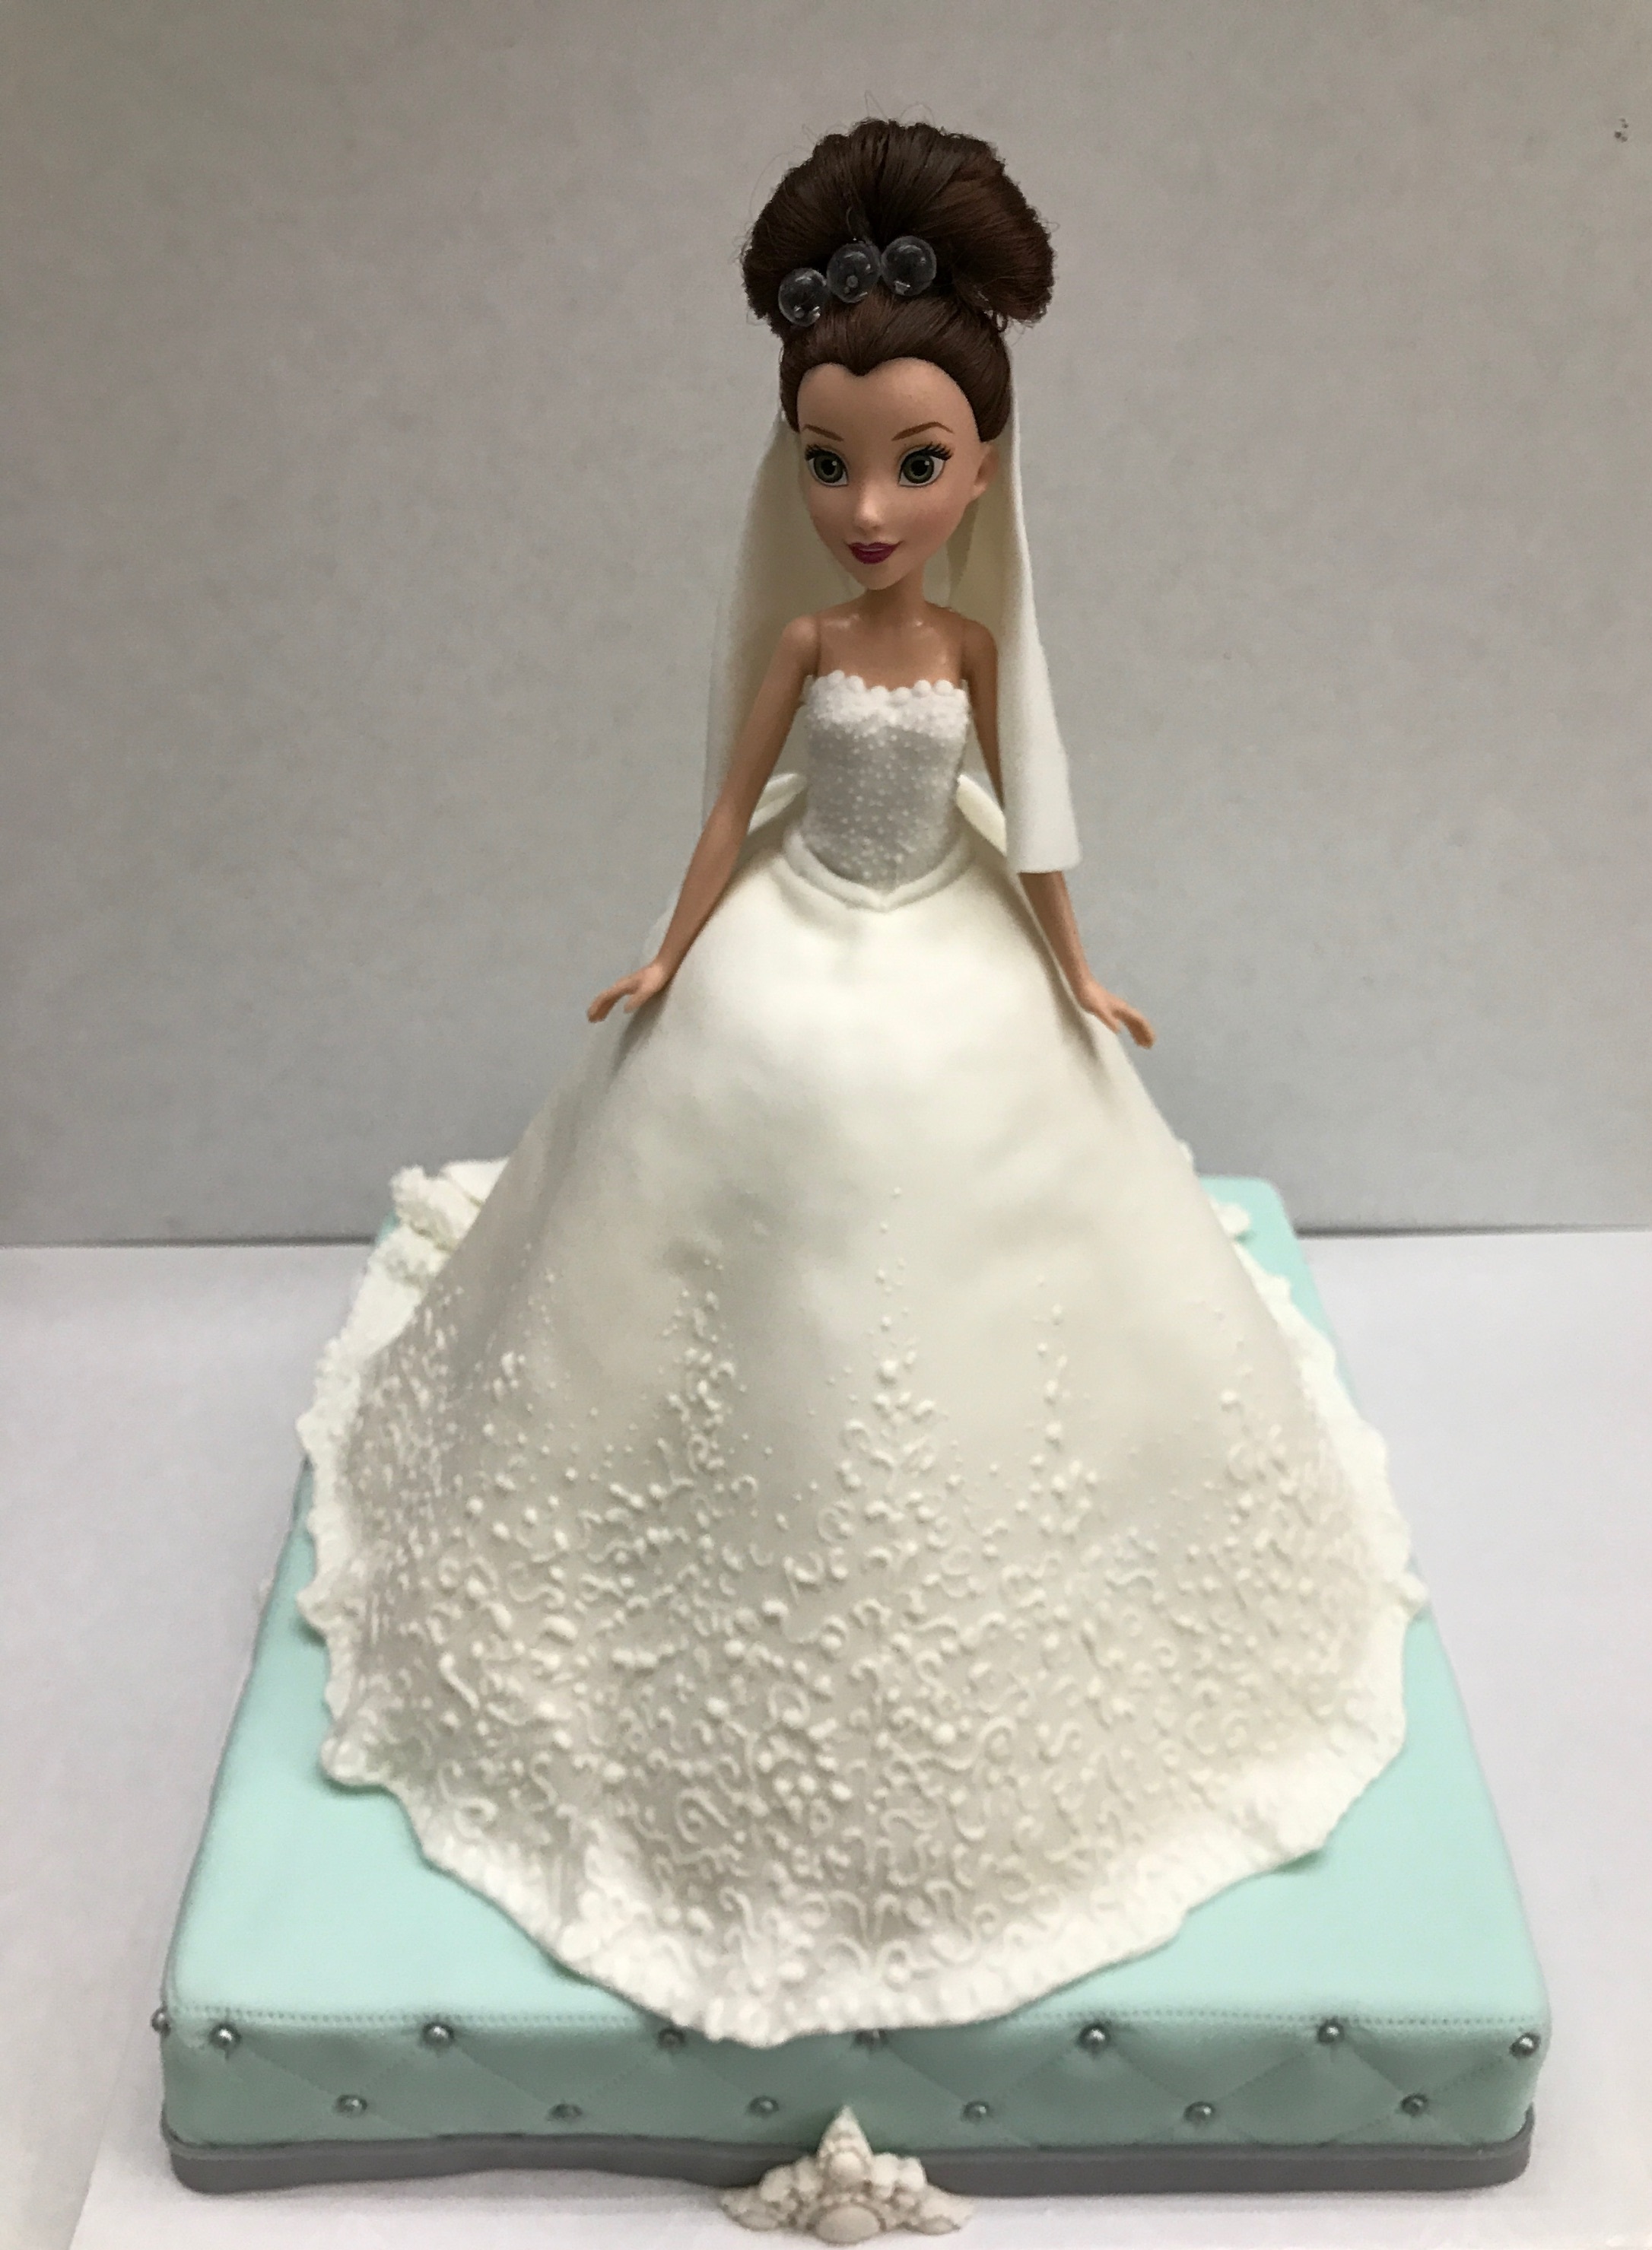 Wedding Dress Cake  Rosanna Pansino